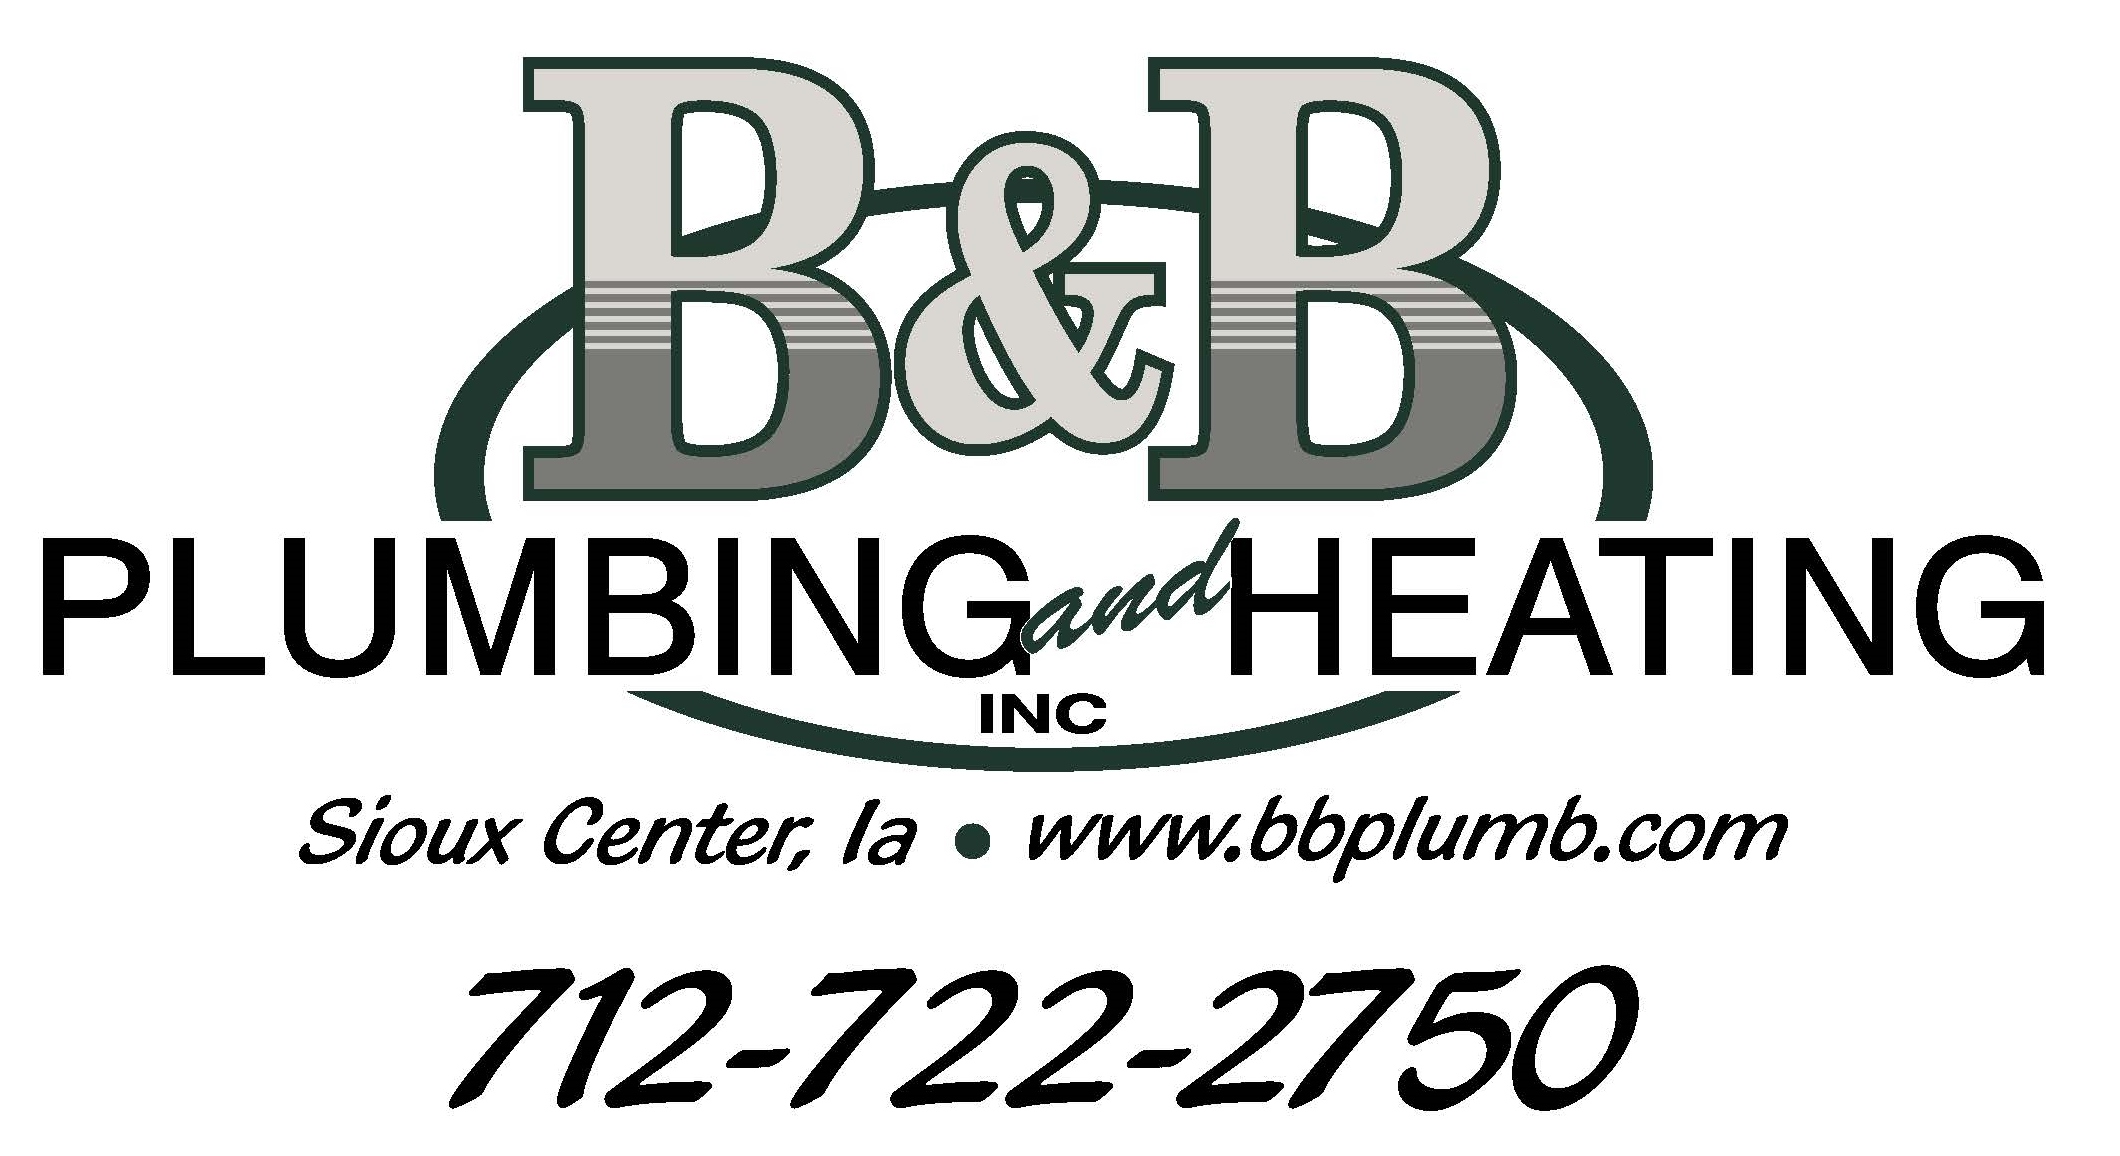 B&B Plumbing & Heating